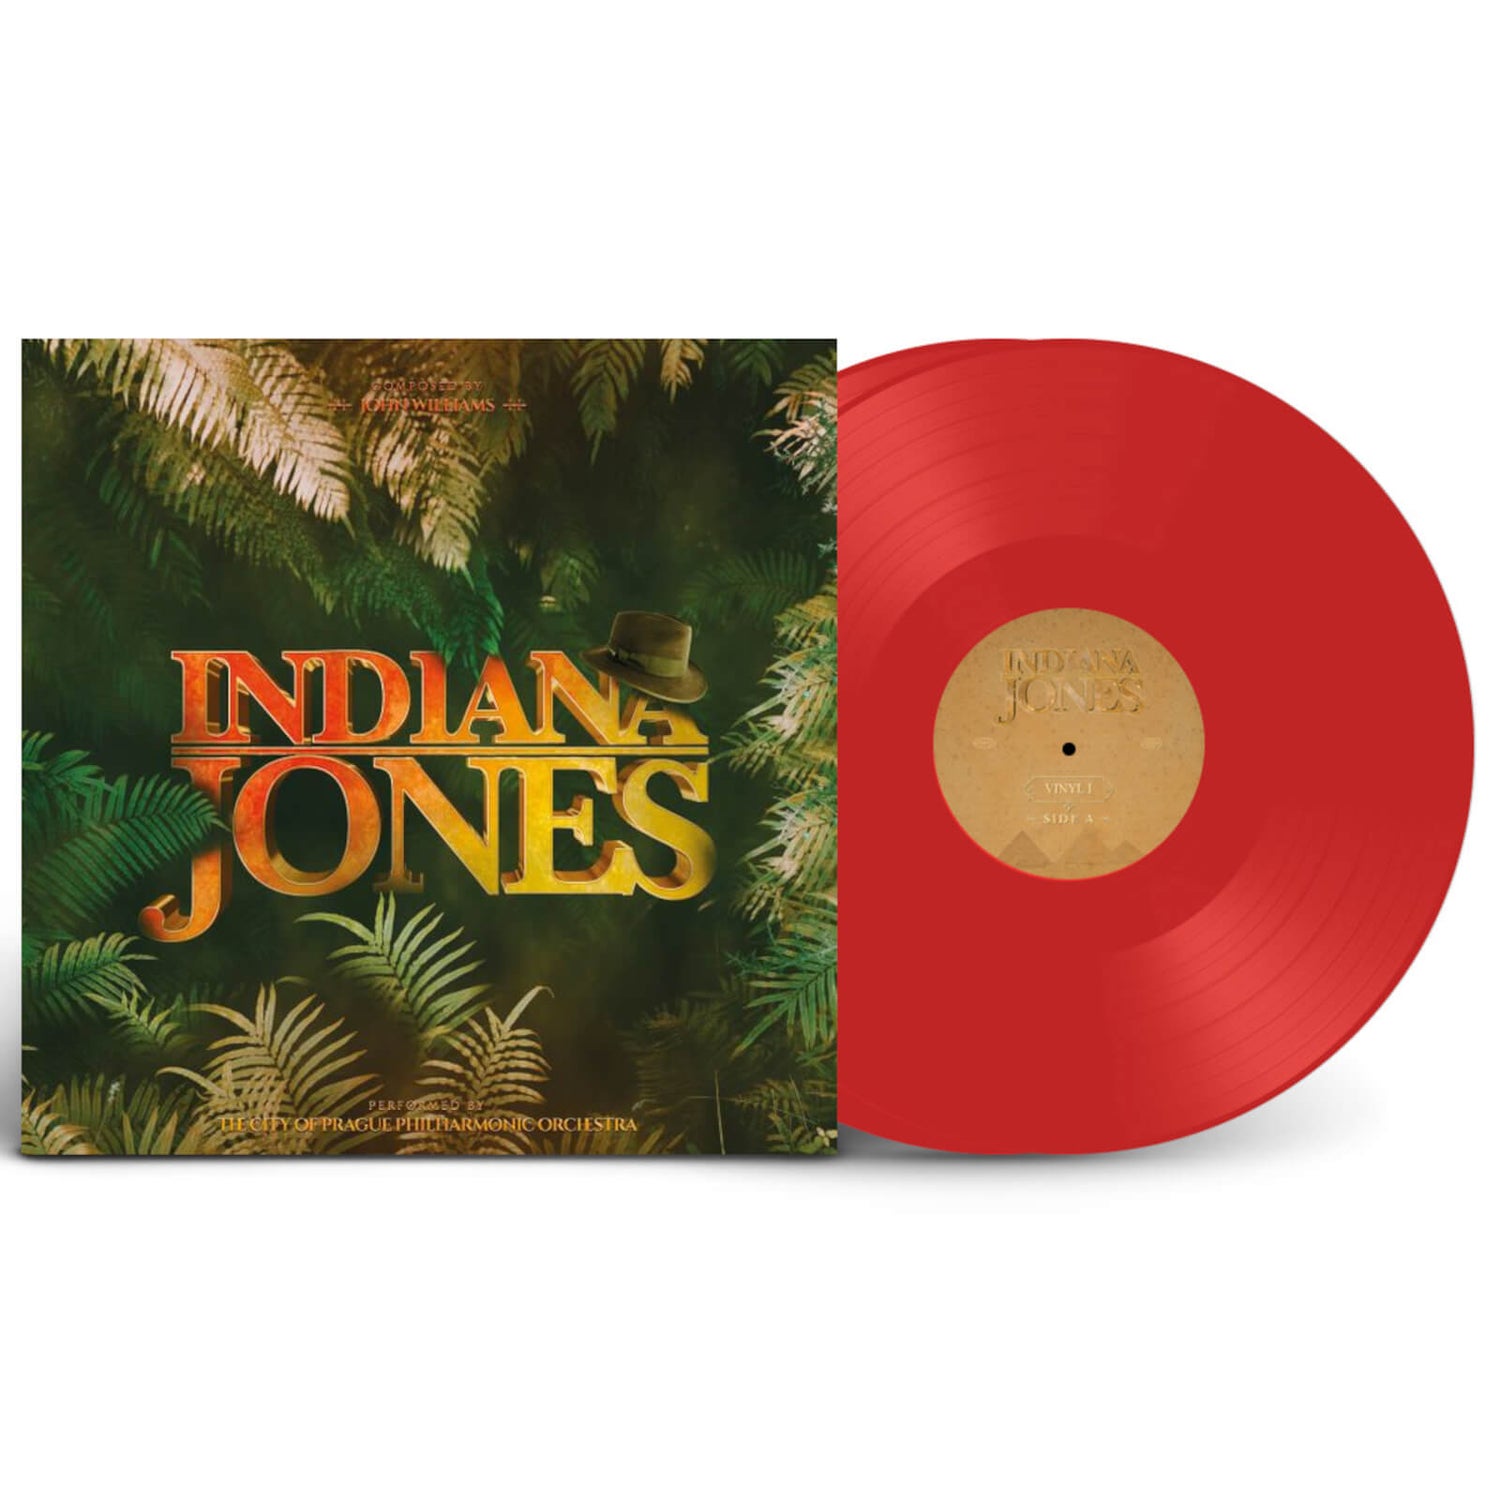 Diggers Factory - The Indiana Jones Trilogy Vinyl 2LP